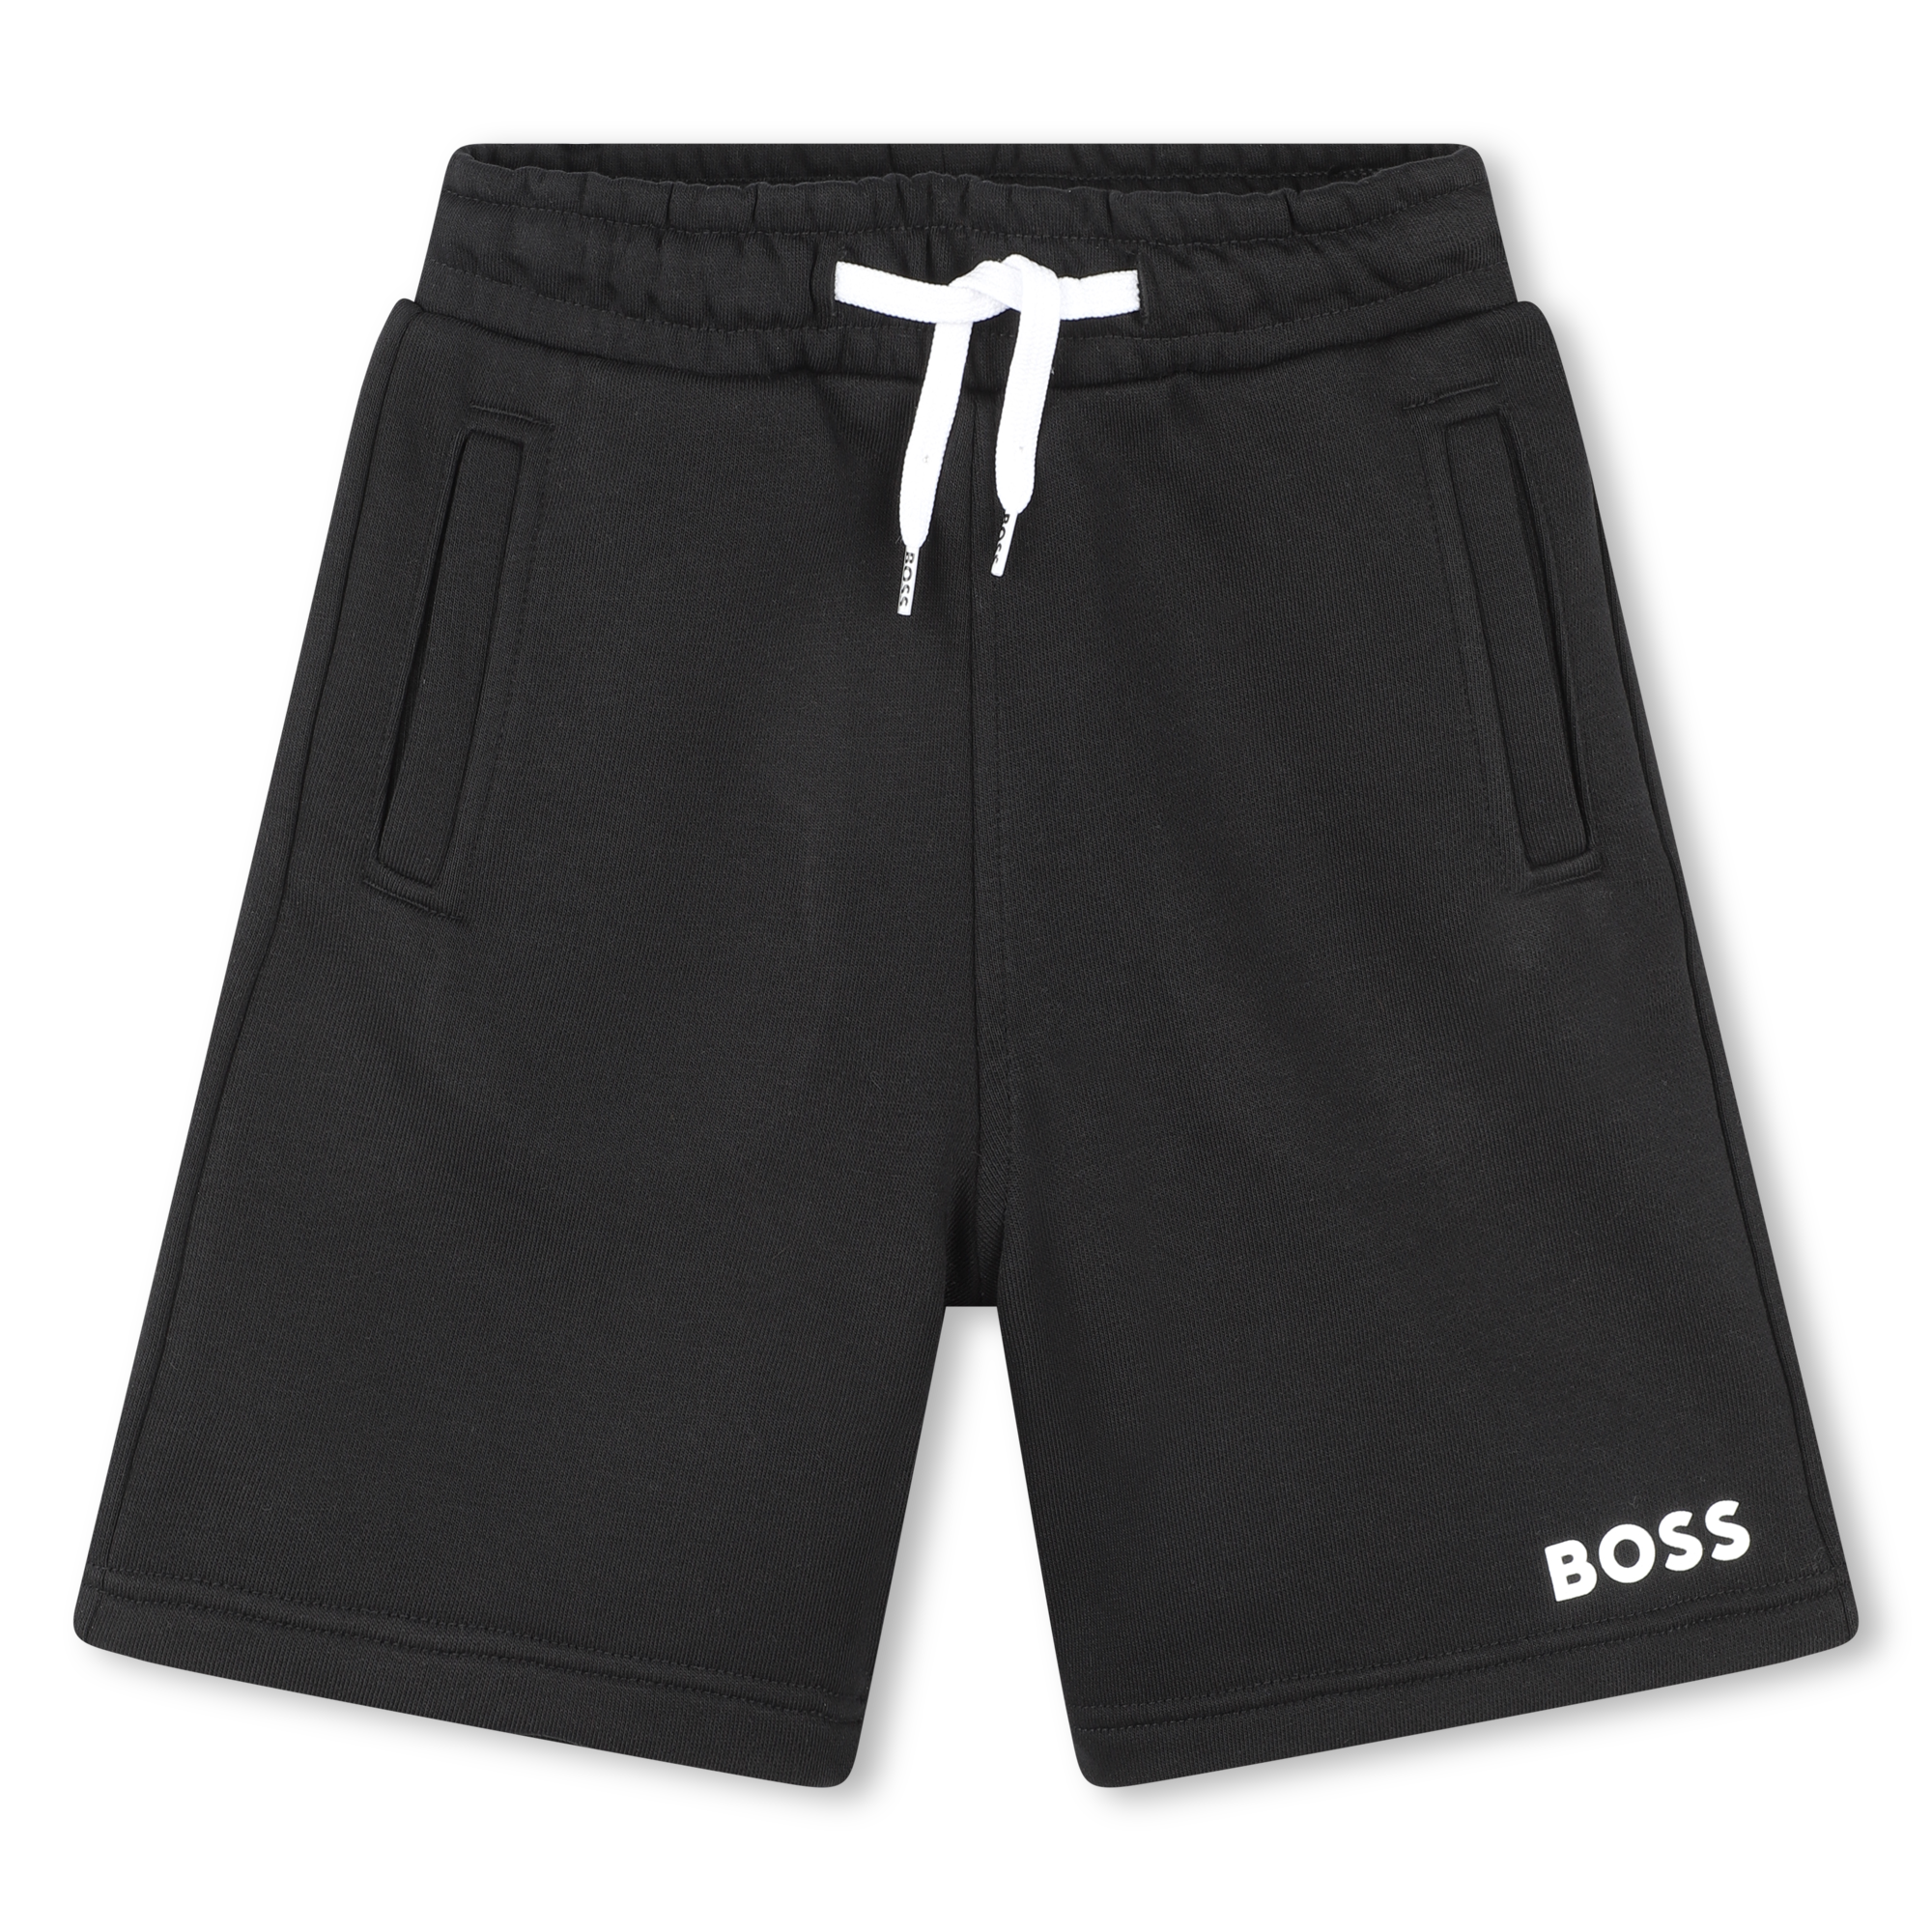 BOSS Kidswear Ceremony elasticated-waist shorts - Brown